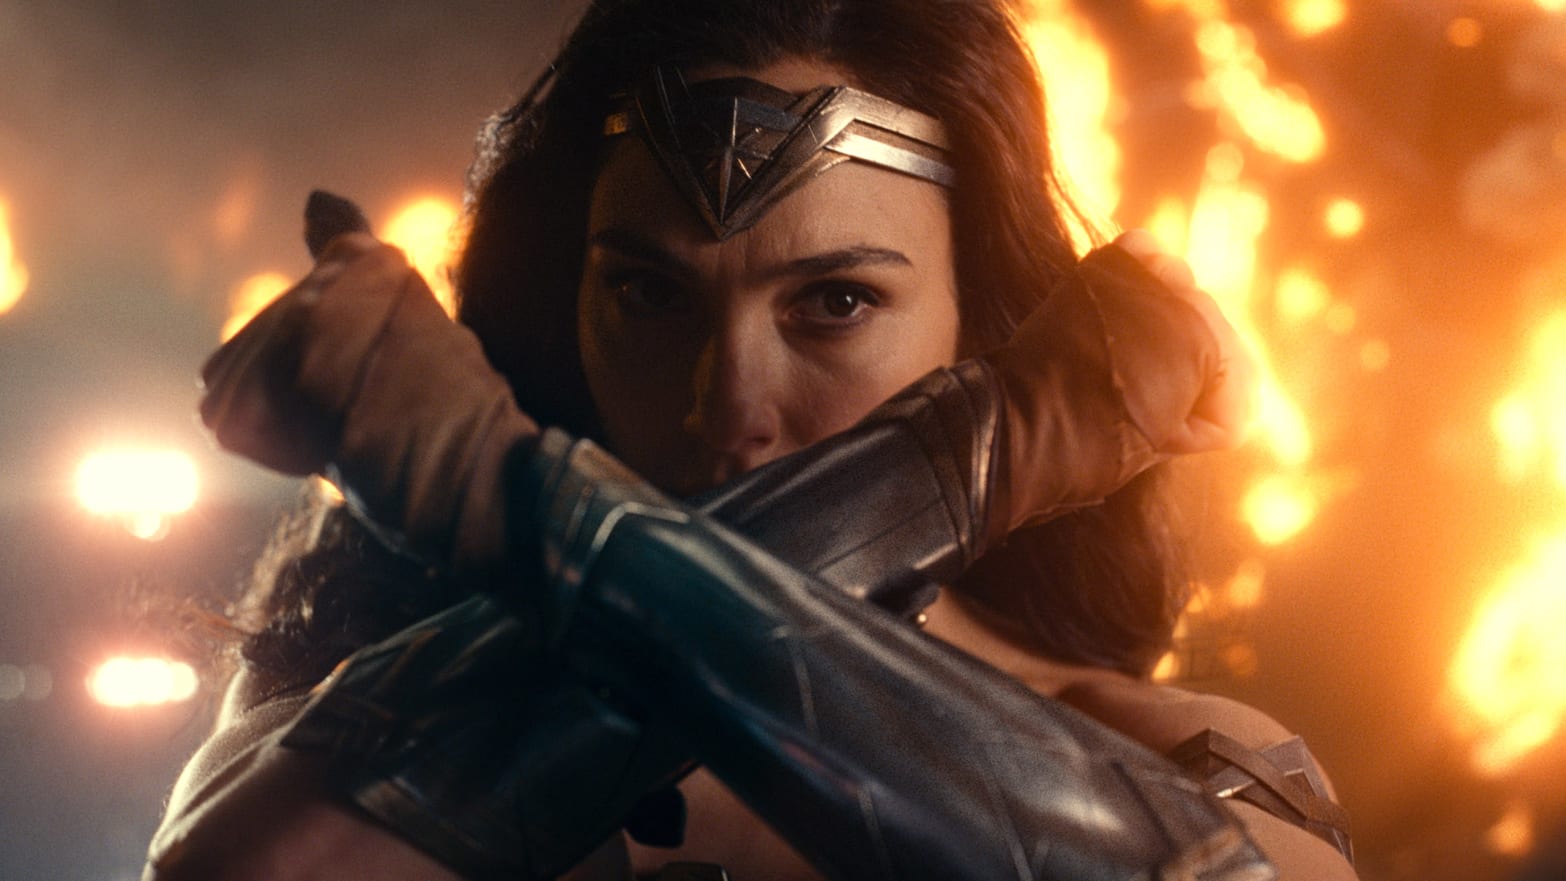 Wonder Woman' Gal Gadot Gets Dragged Into a Real-Life Israel-Arab Spy Drama